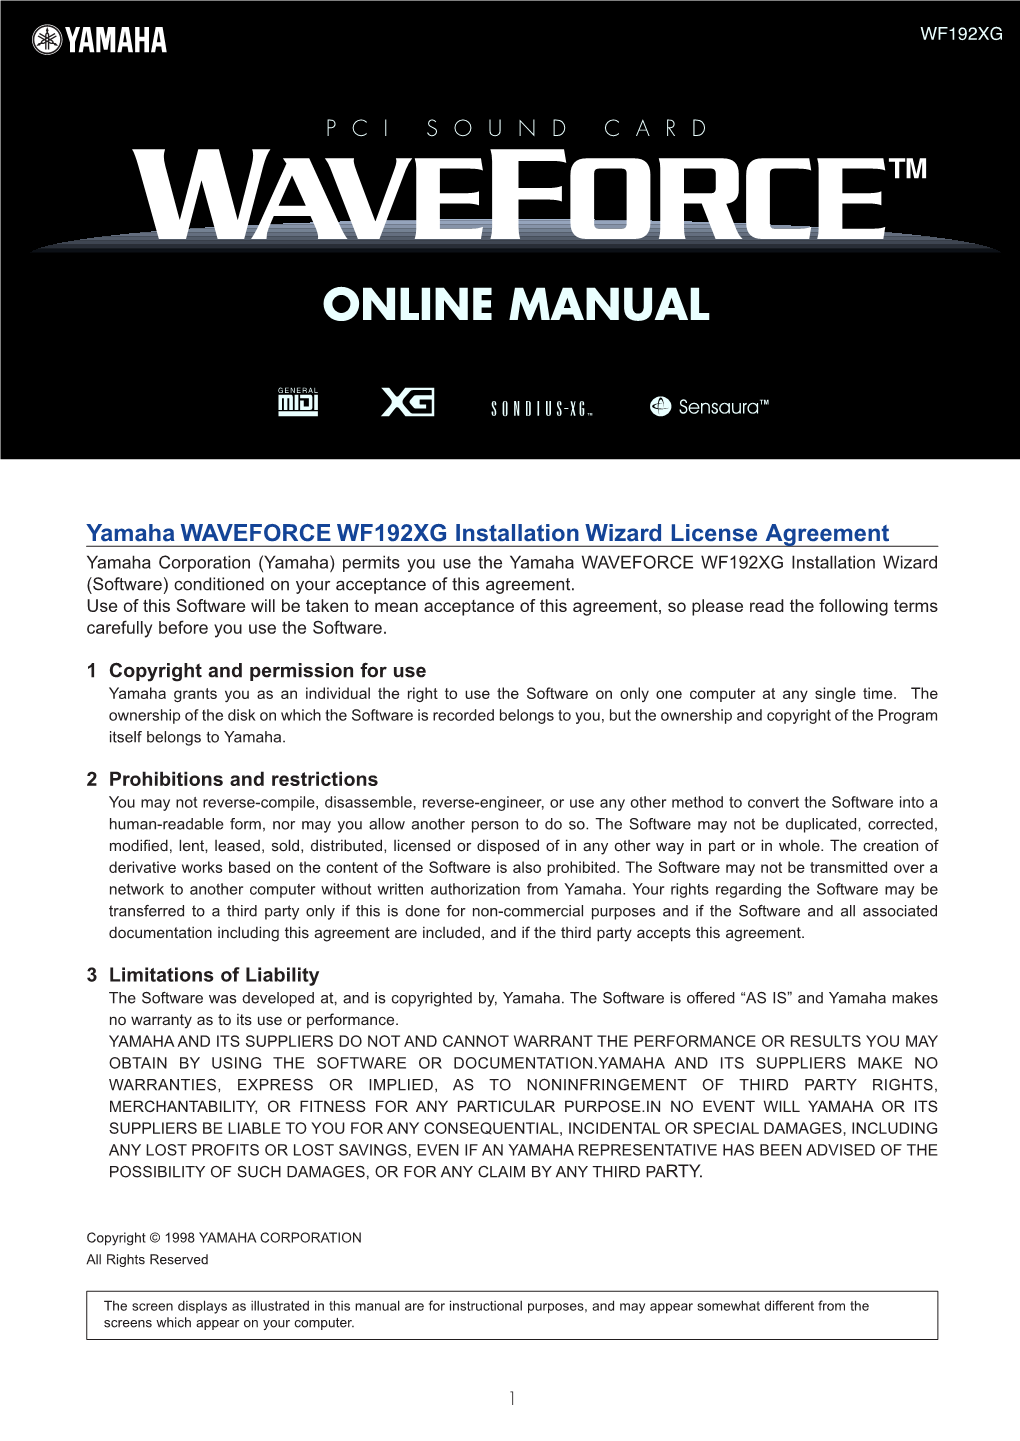 Yamaha WAVEFORCE WF192XG Installation Wizard License